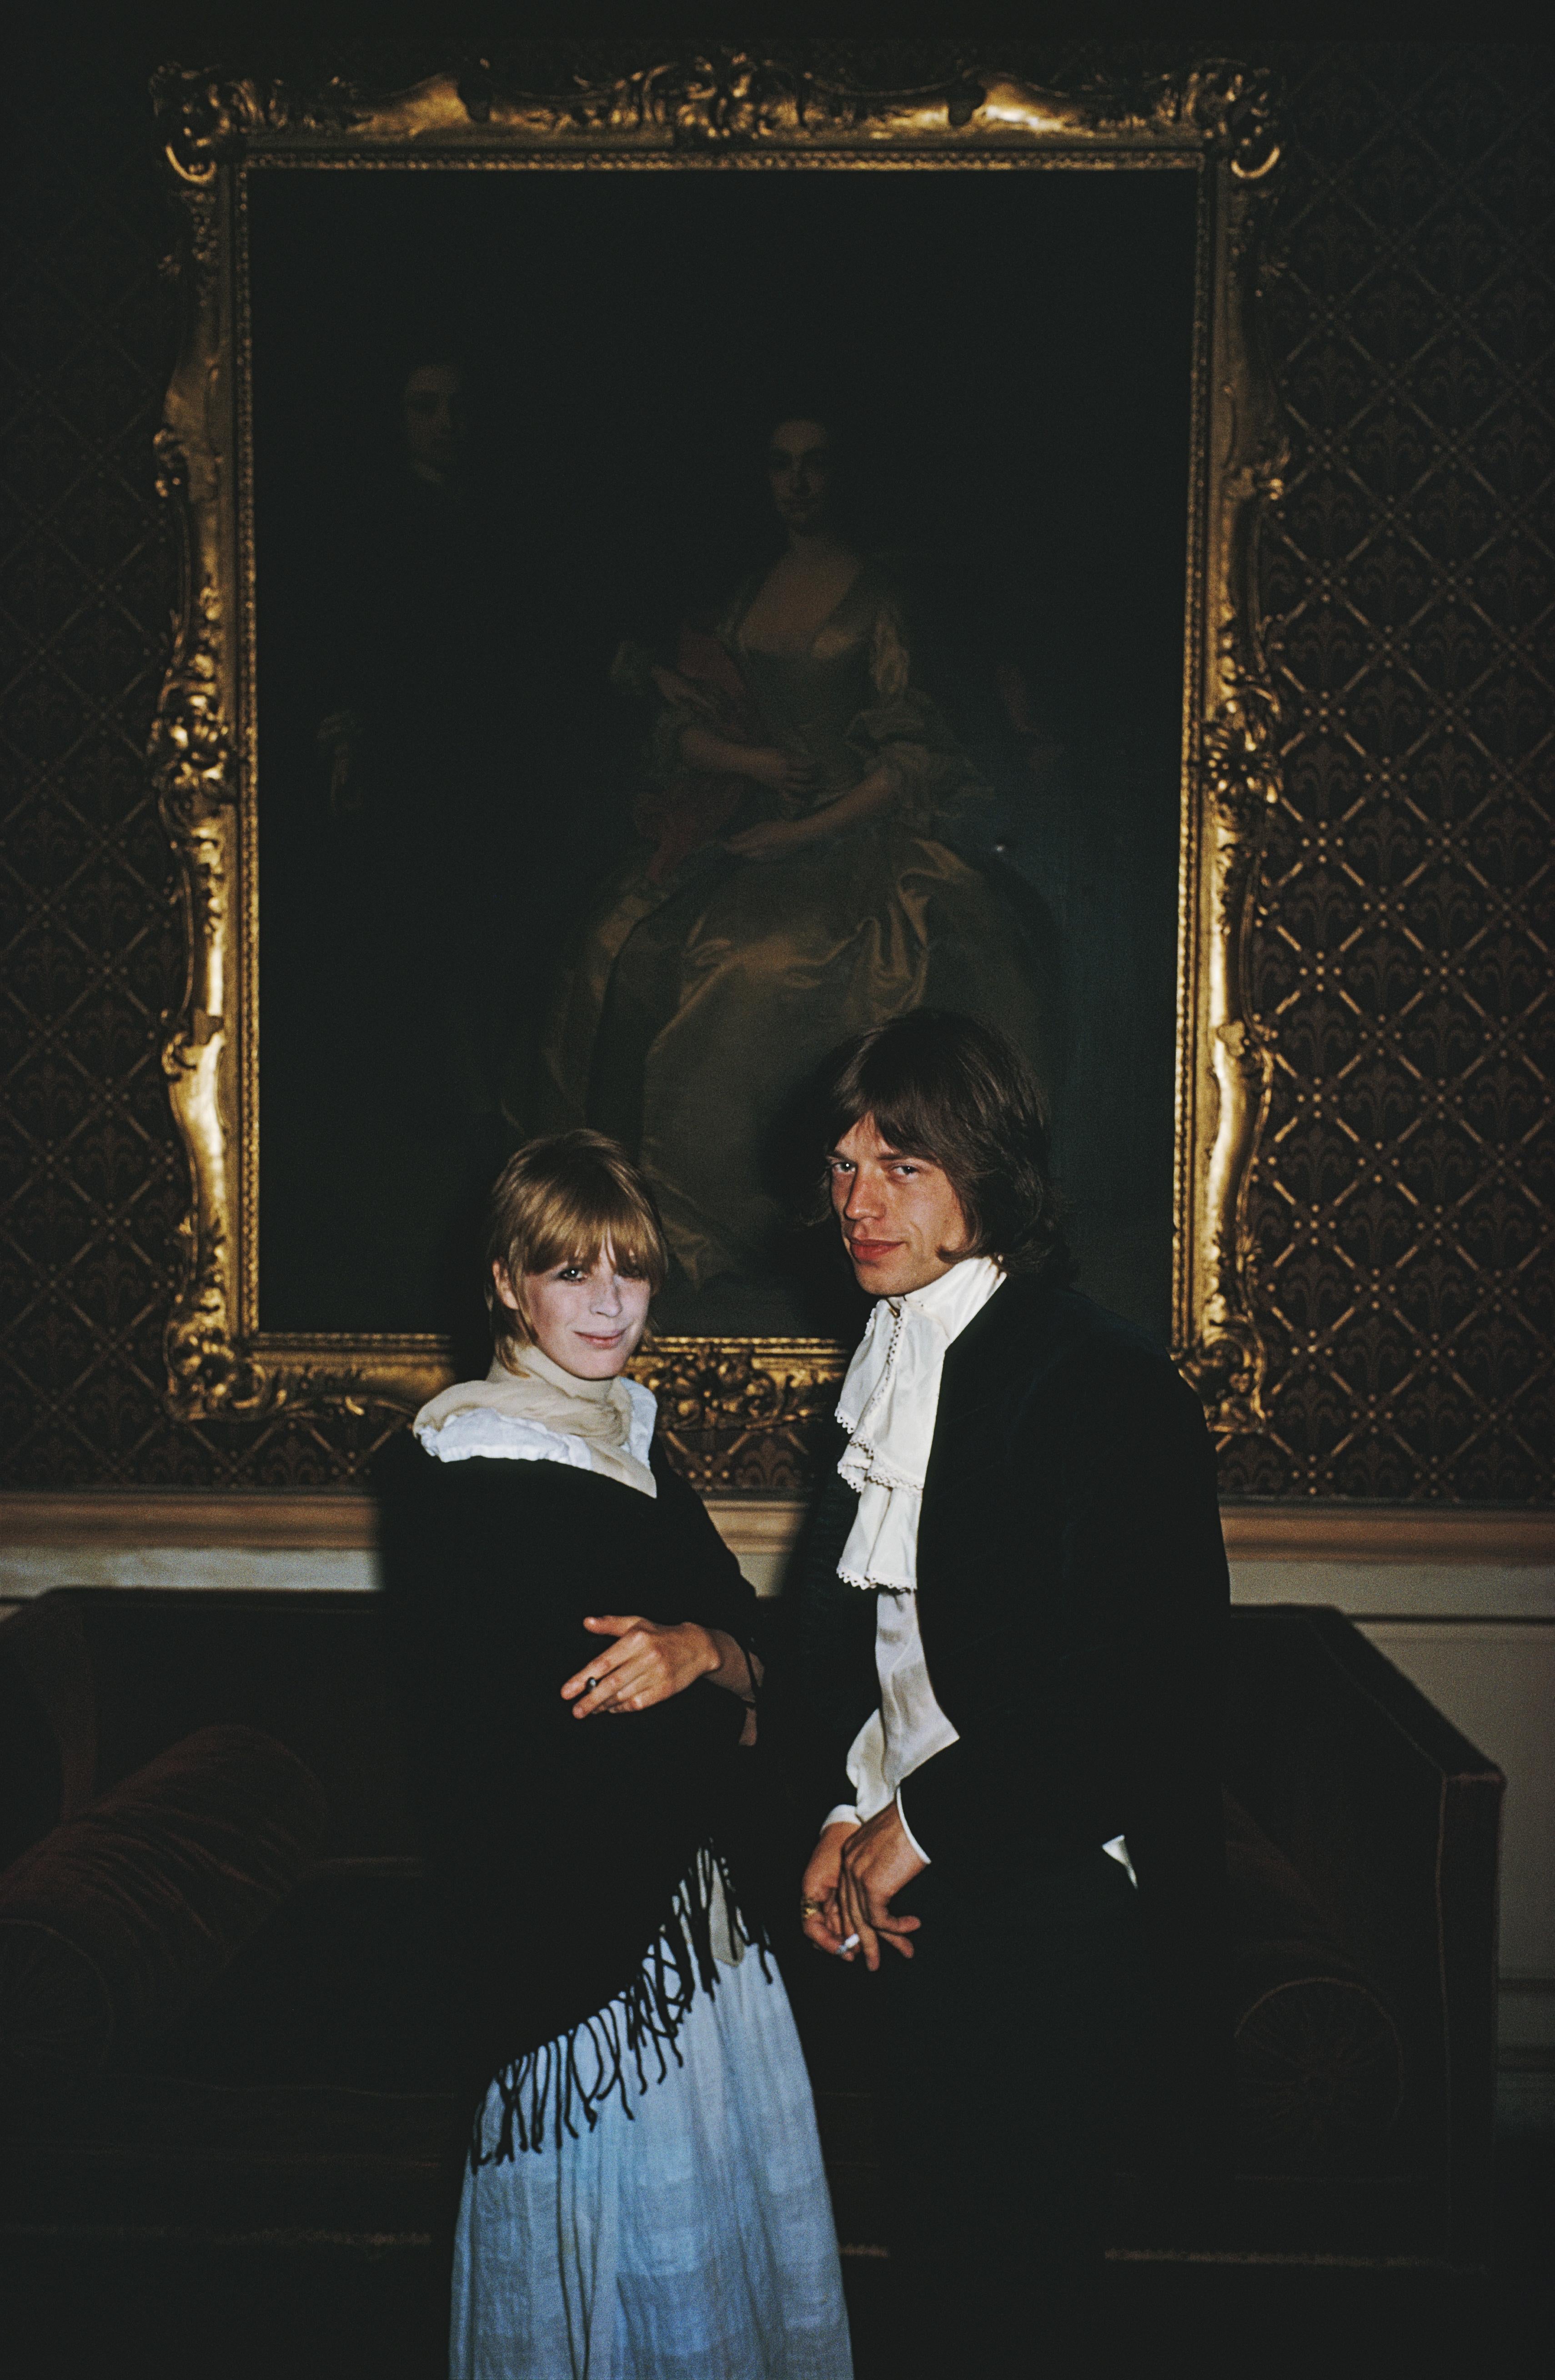 Slim Aarons Portrait Photograph - Faithful Couple: Mick Jagger and Marianne Faithfull at vintage Leixlip Castle